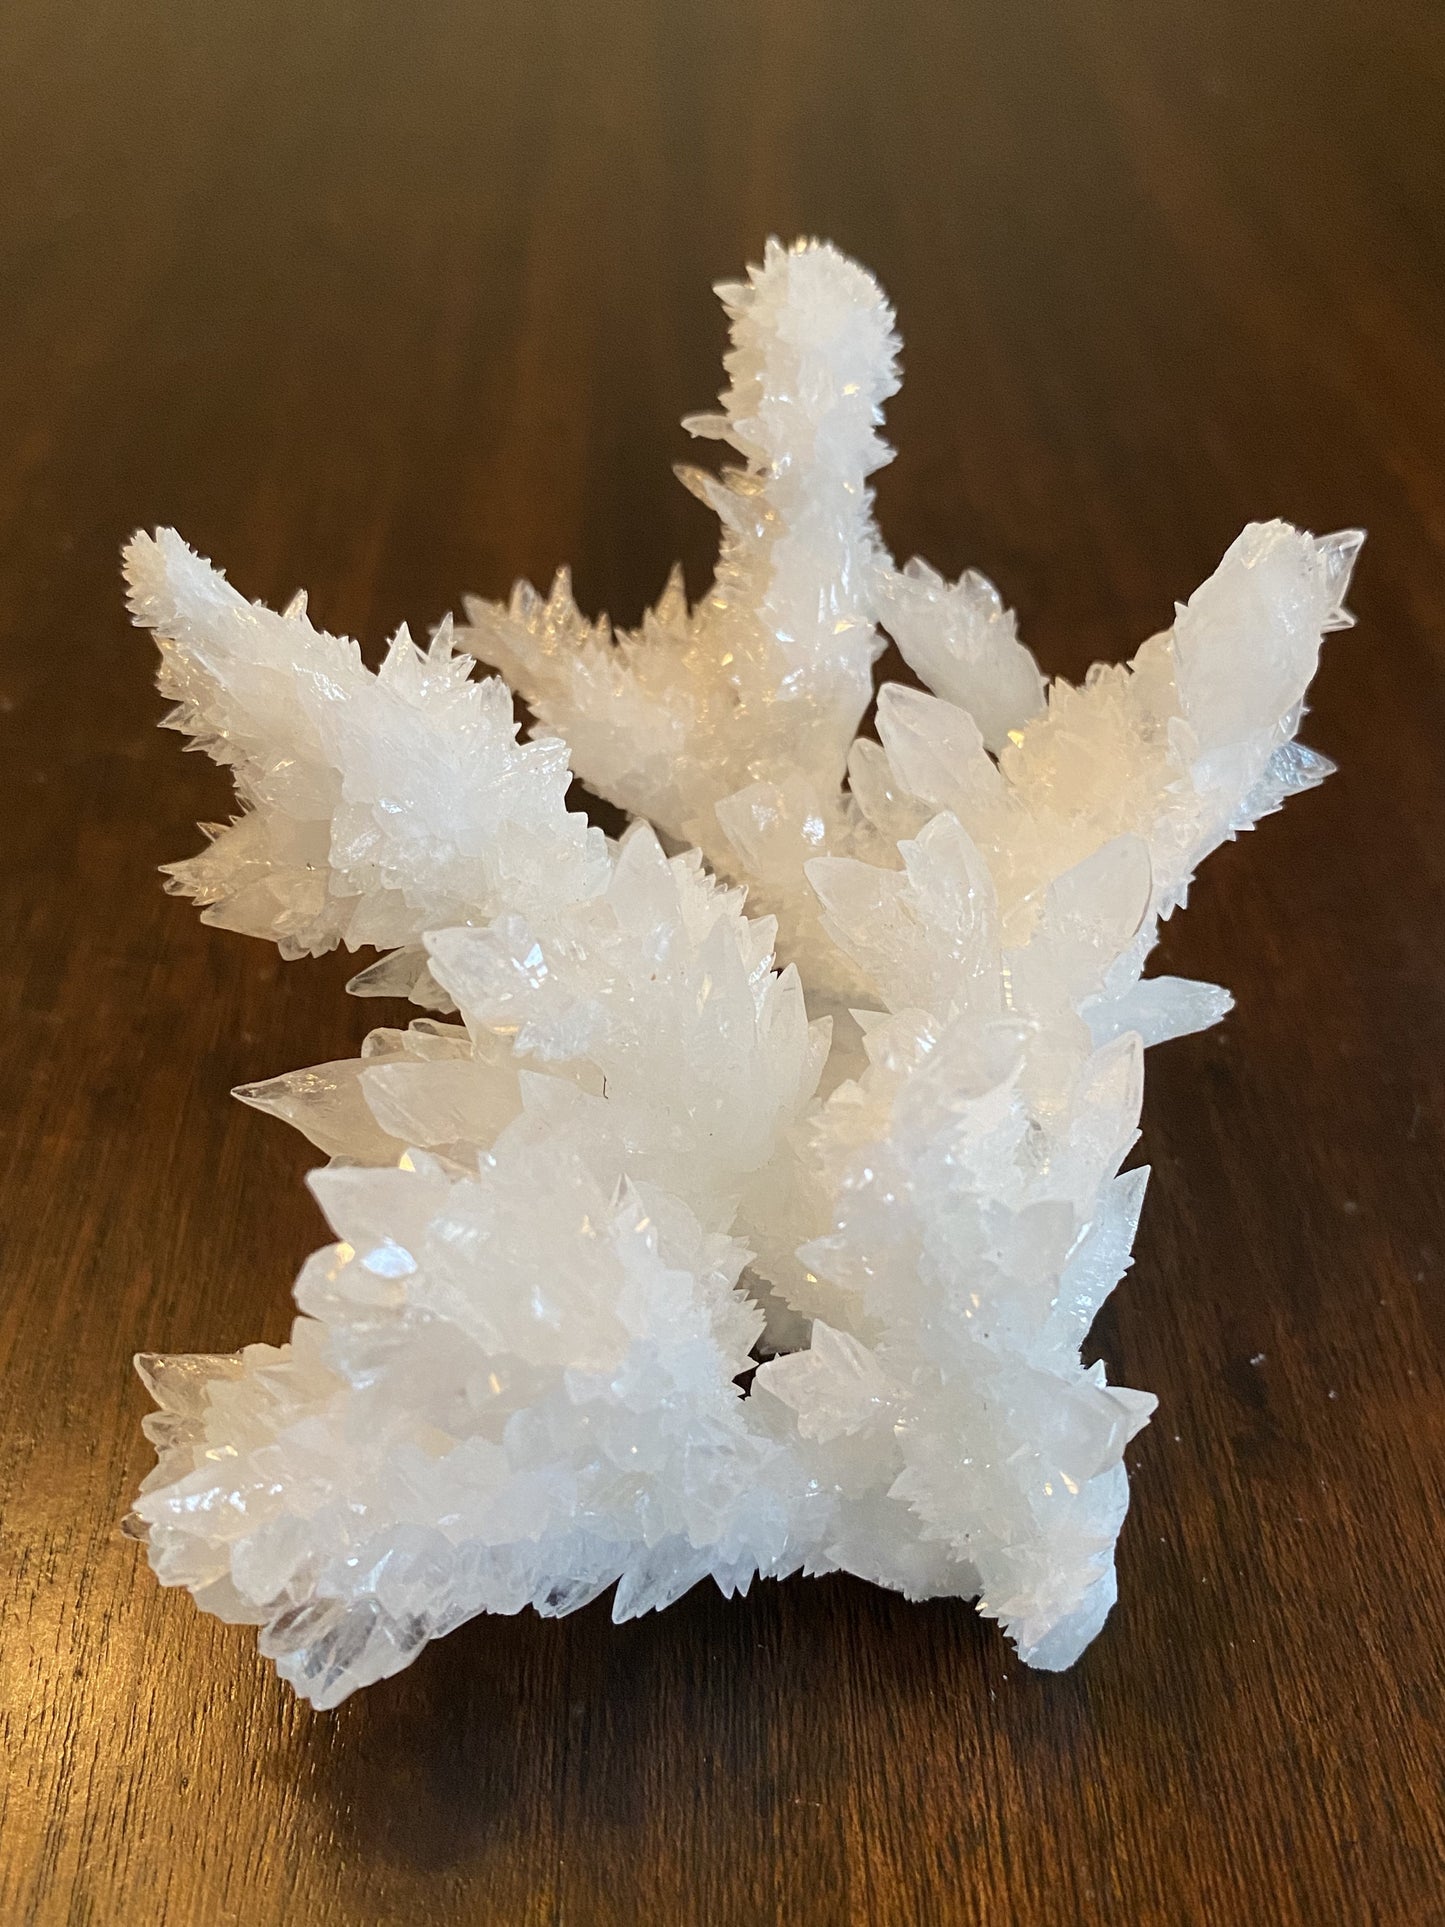 Calcite "snowflake", Mexico